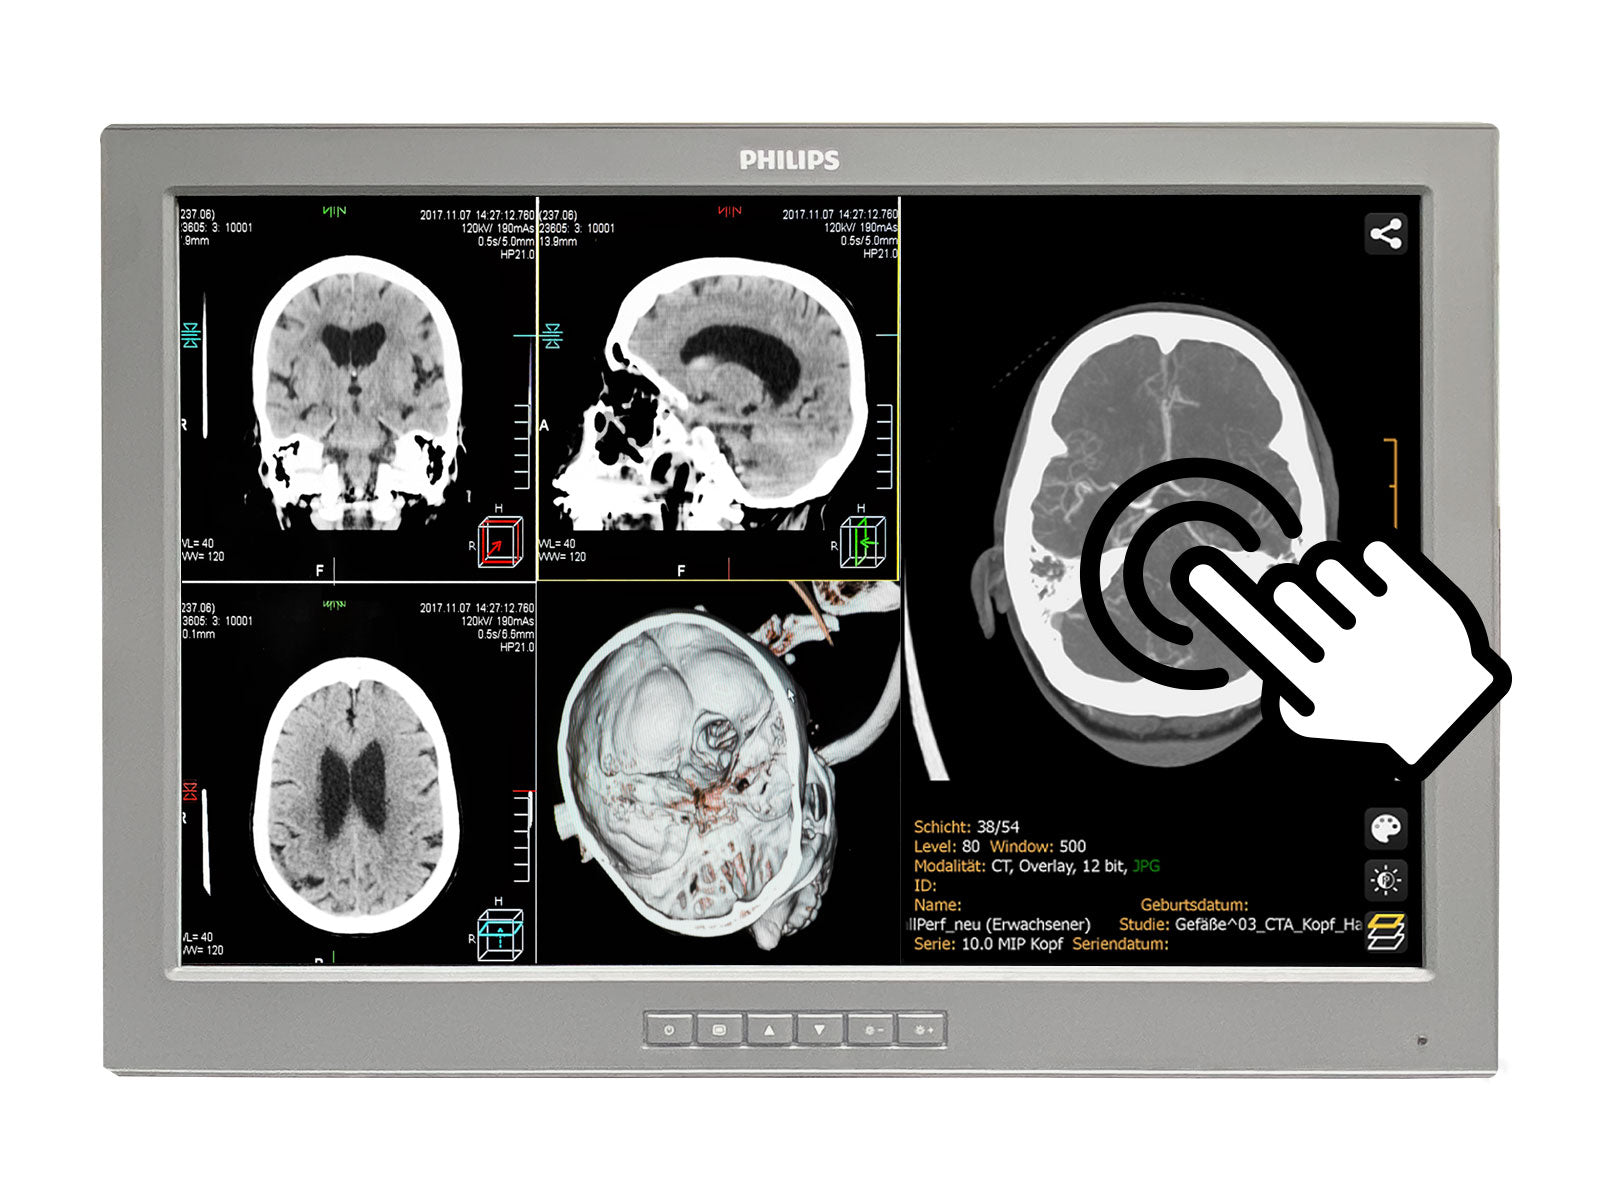 Barco P240-LTv Touchscreen MED24ESB 24" WUXGA 1920 x 1200 2MP Philips DICOM Clinical Review Monitor von Fimi Barco (P240-LTv)